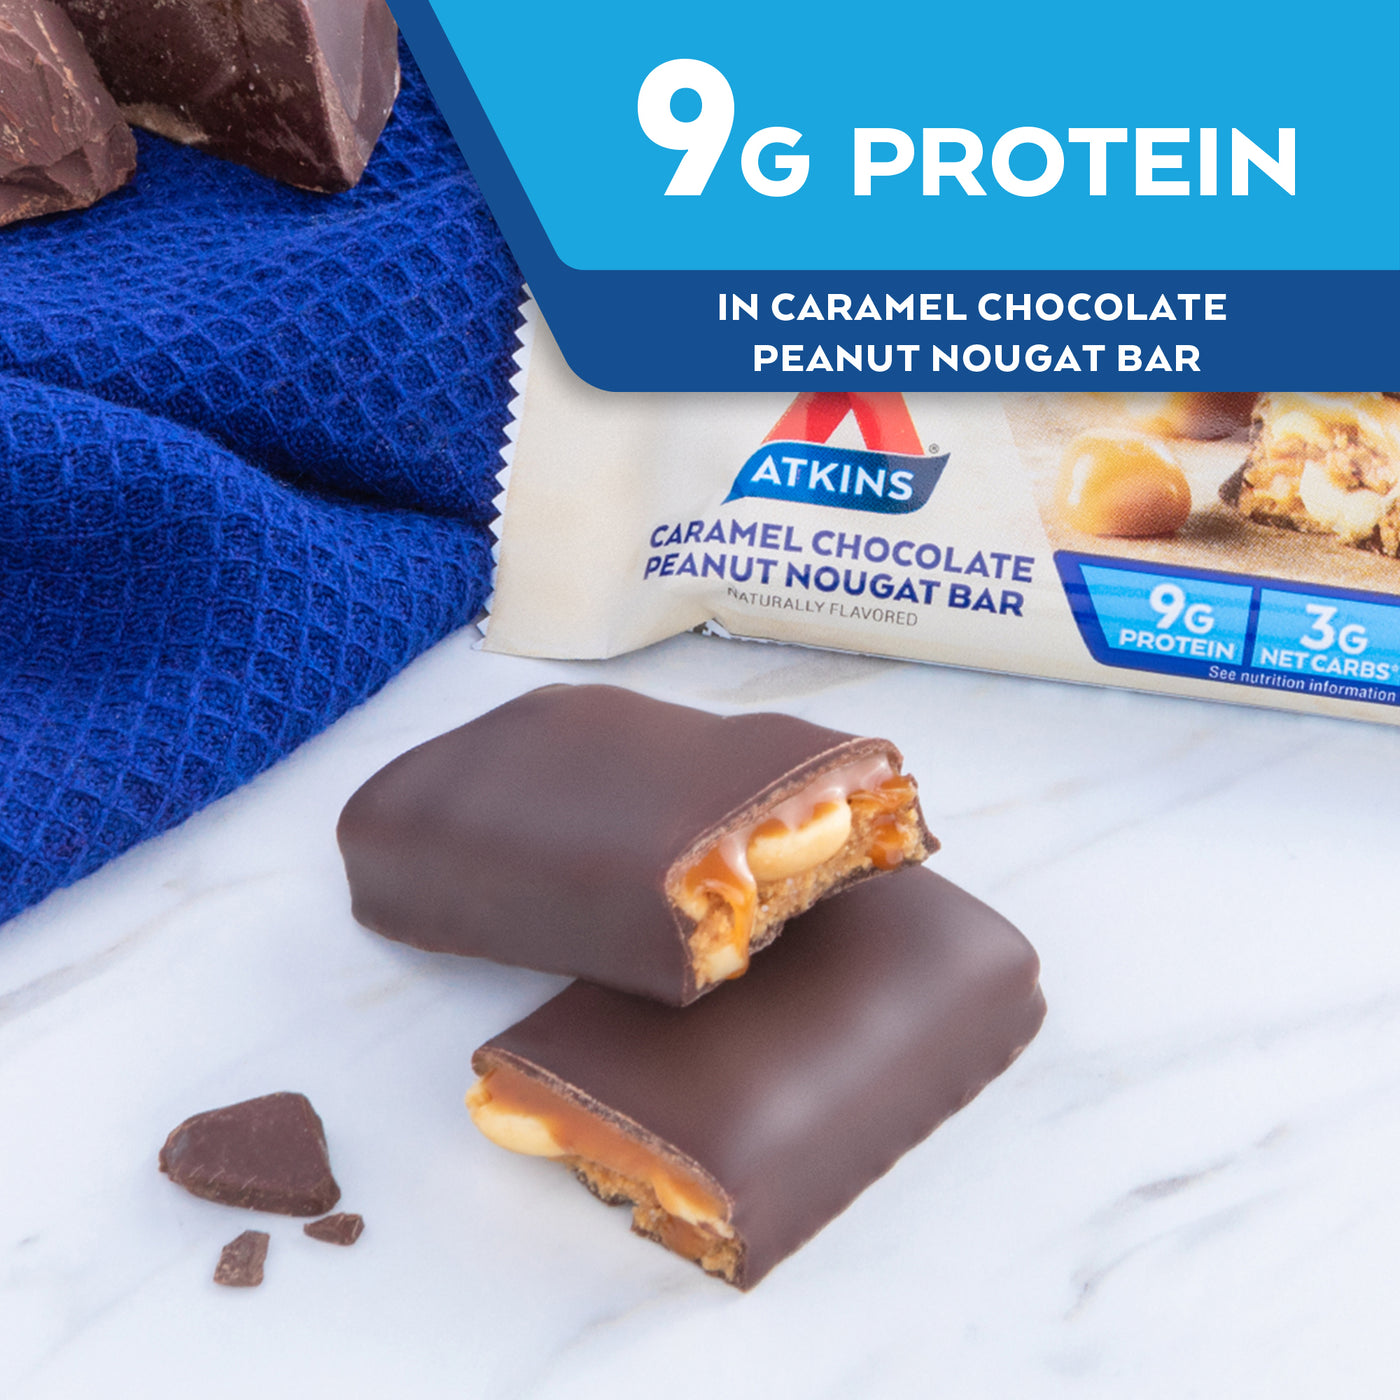 Caramel Chocolate Peanut Nougat Bar; 9G Protein in Caramel Chocolate Peanut Nougat Bar